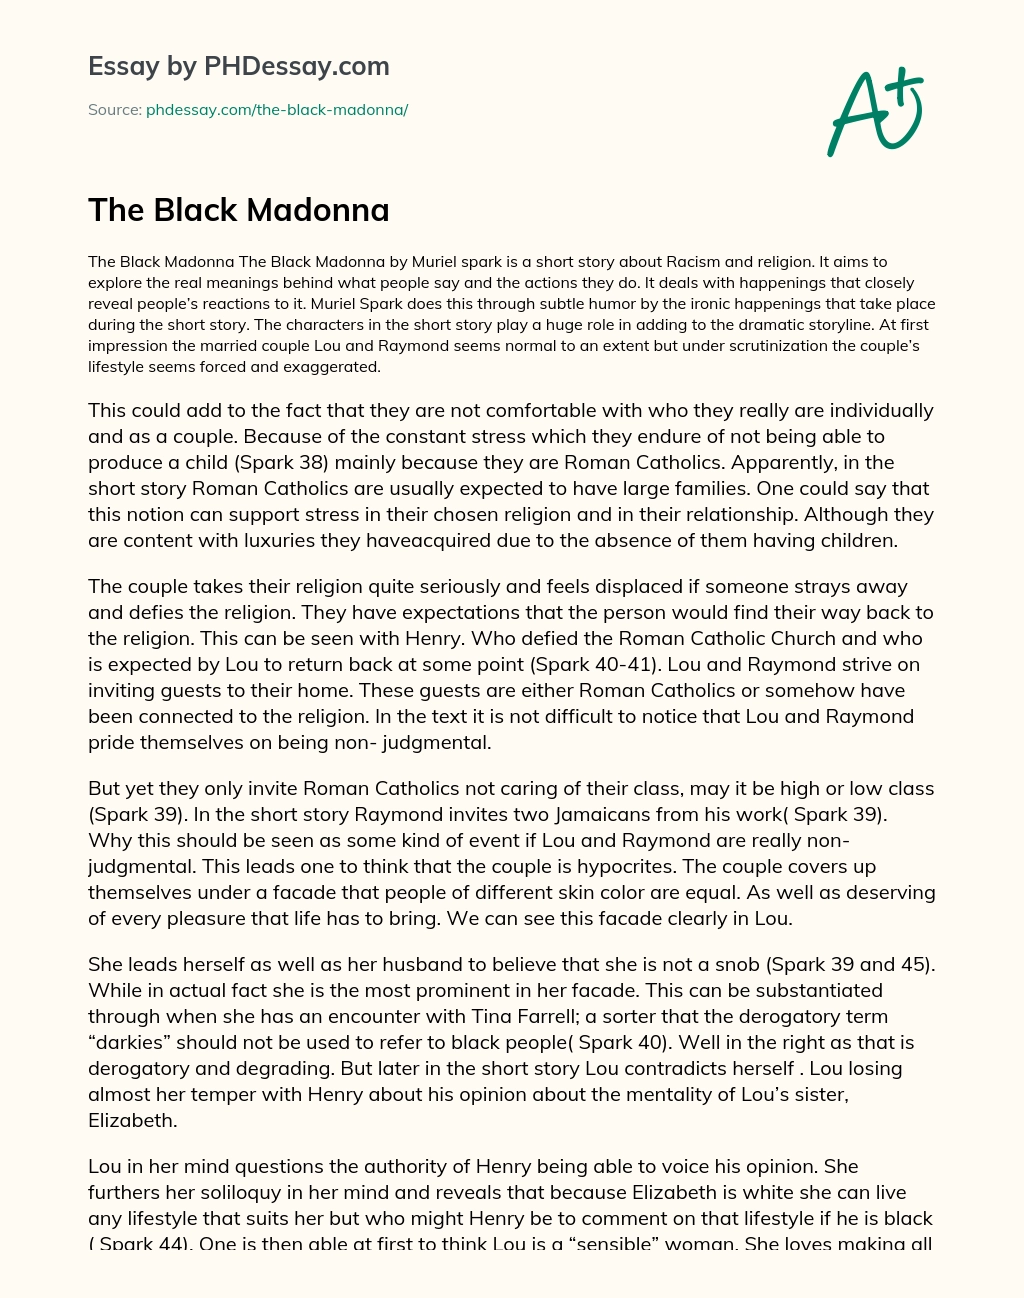 The Black Madonna essay